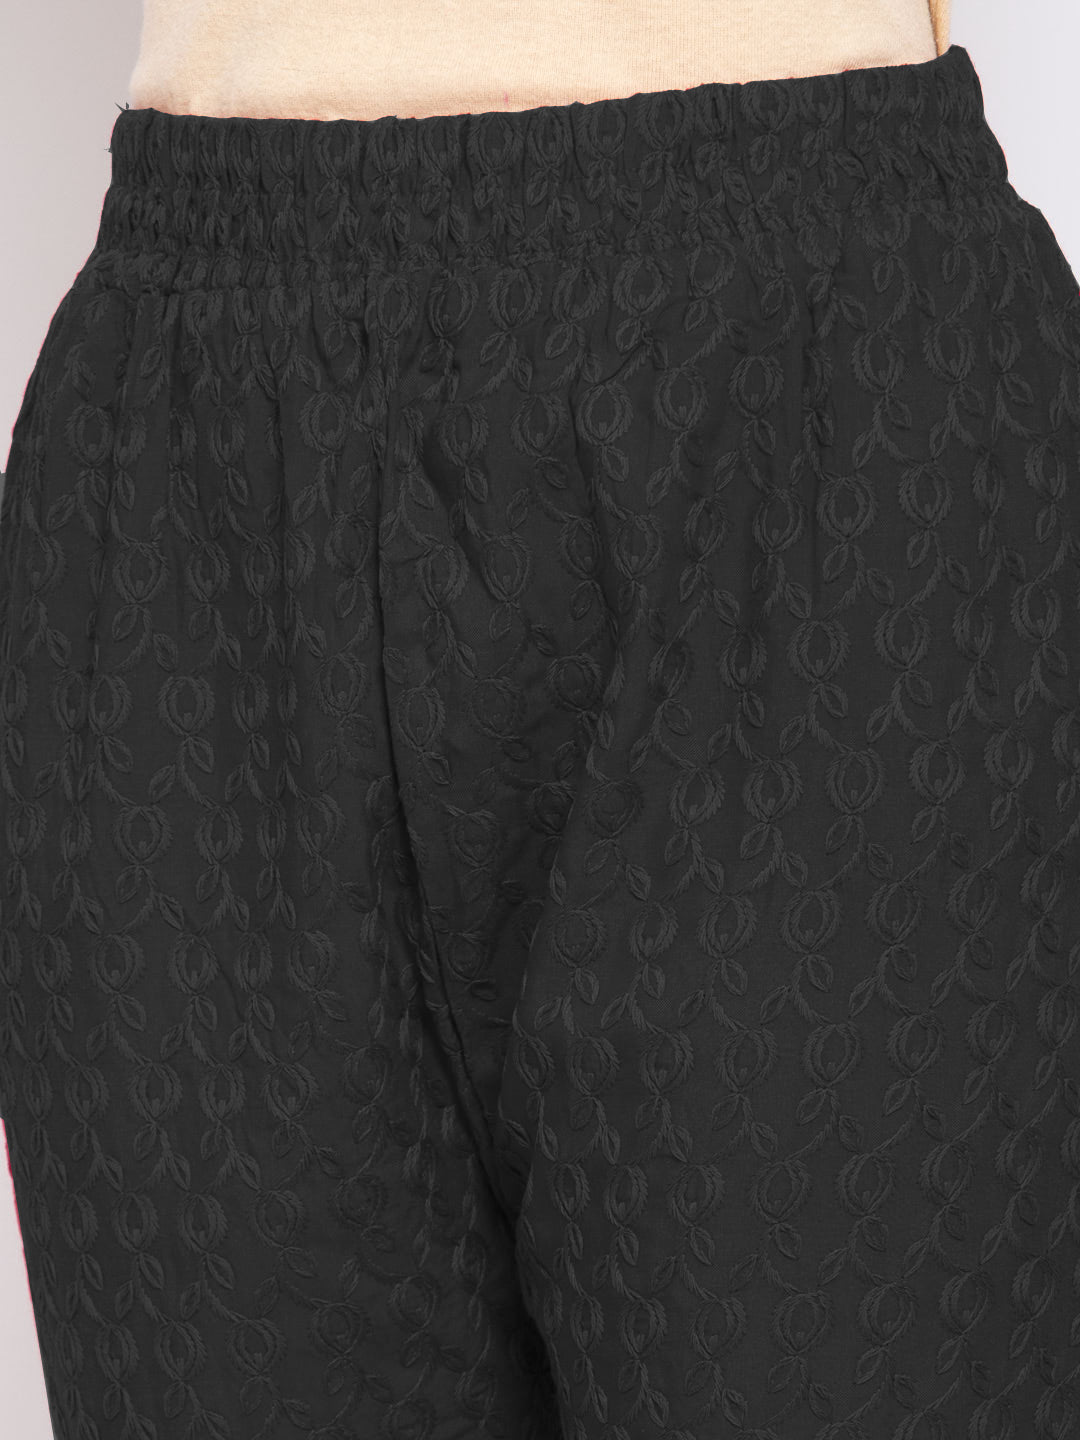 KLOTTHE Black Cotton Embroidered Trouser